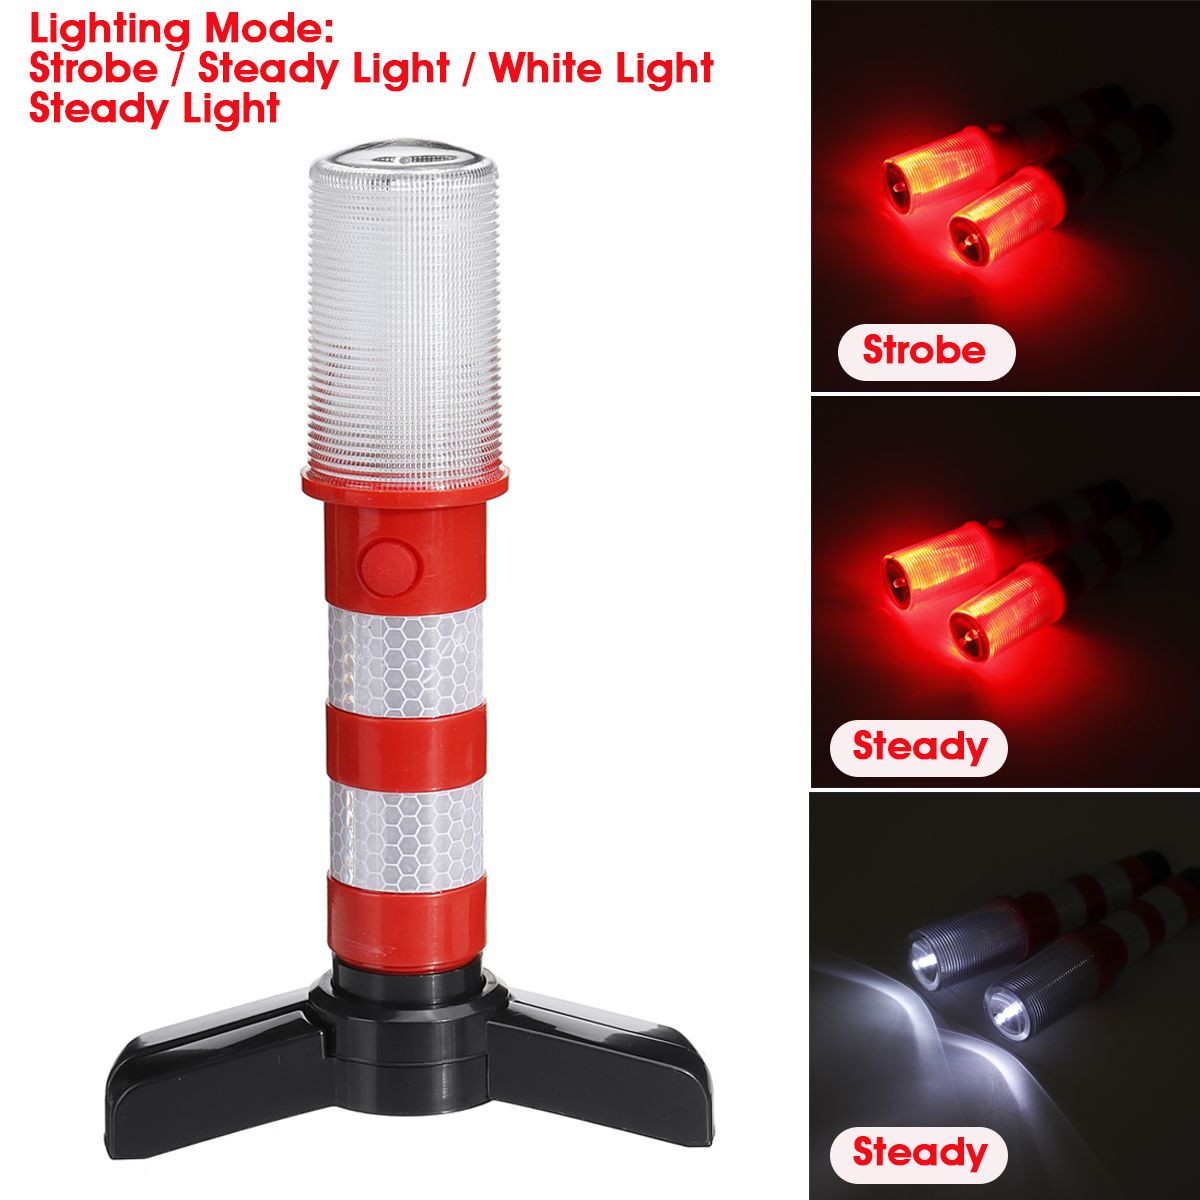 2PCS-LED-Car-Emergency-Warning-Light-Roadside-Flash-Flares-Beacon-Safety-Strobe-Lamp-with-Magnet-Bas-1644587